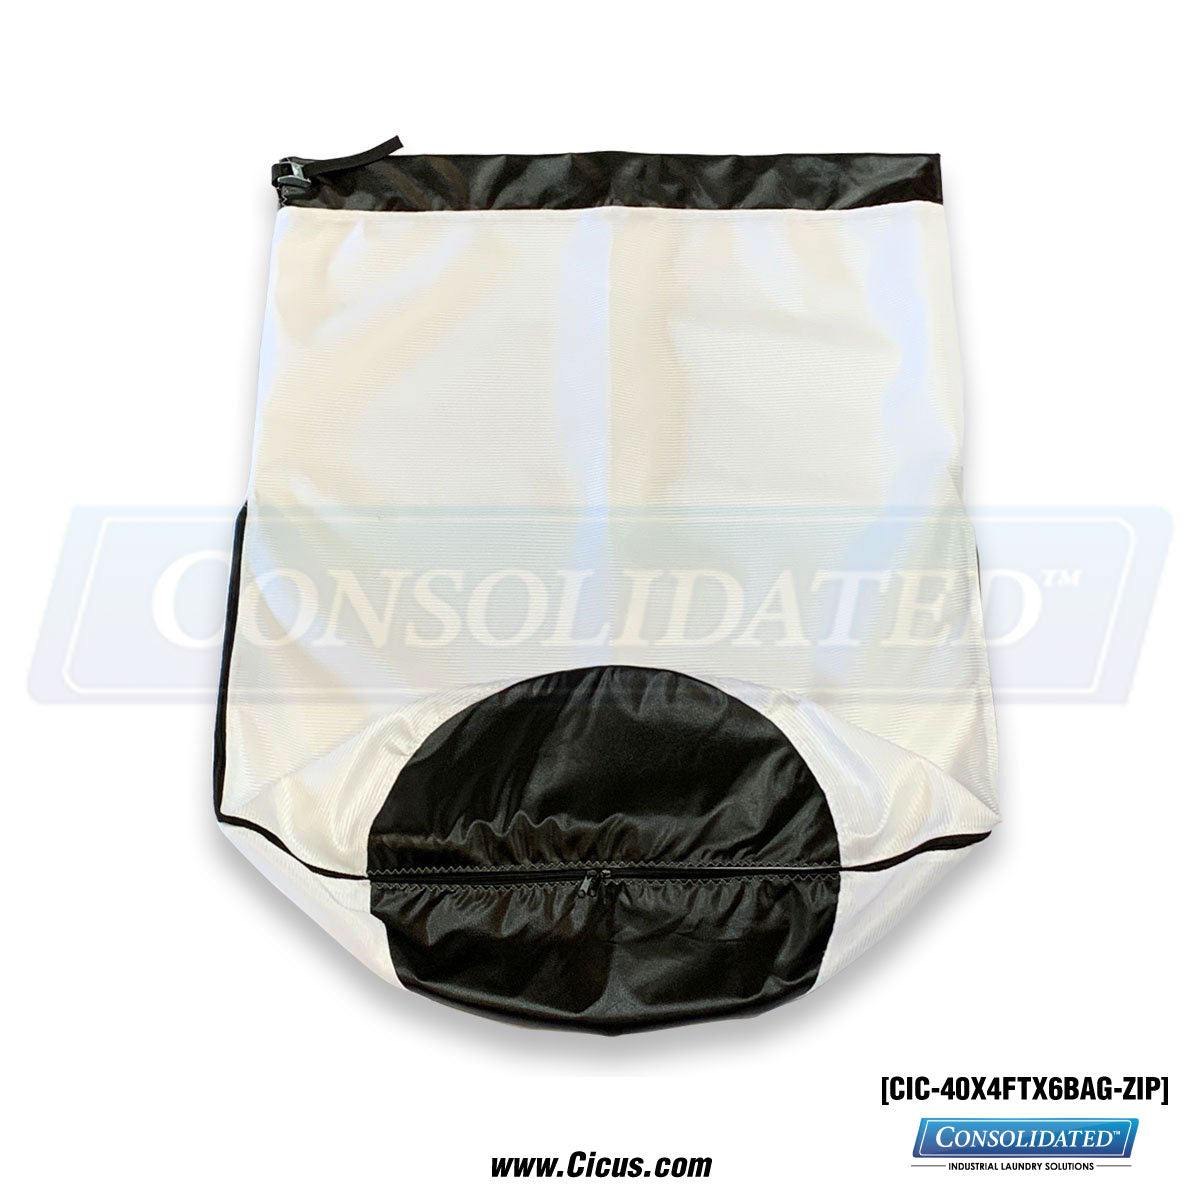 Coronet 40" w x 54" L Lint Bag w/ Wrap Around Zipper [CIC-40X4FTX6BAG-ZIP] - Front View